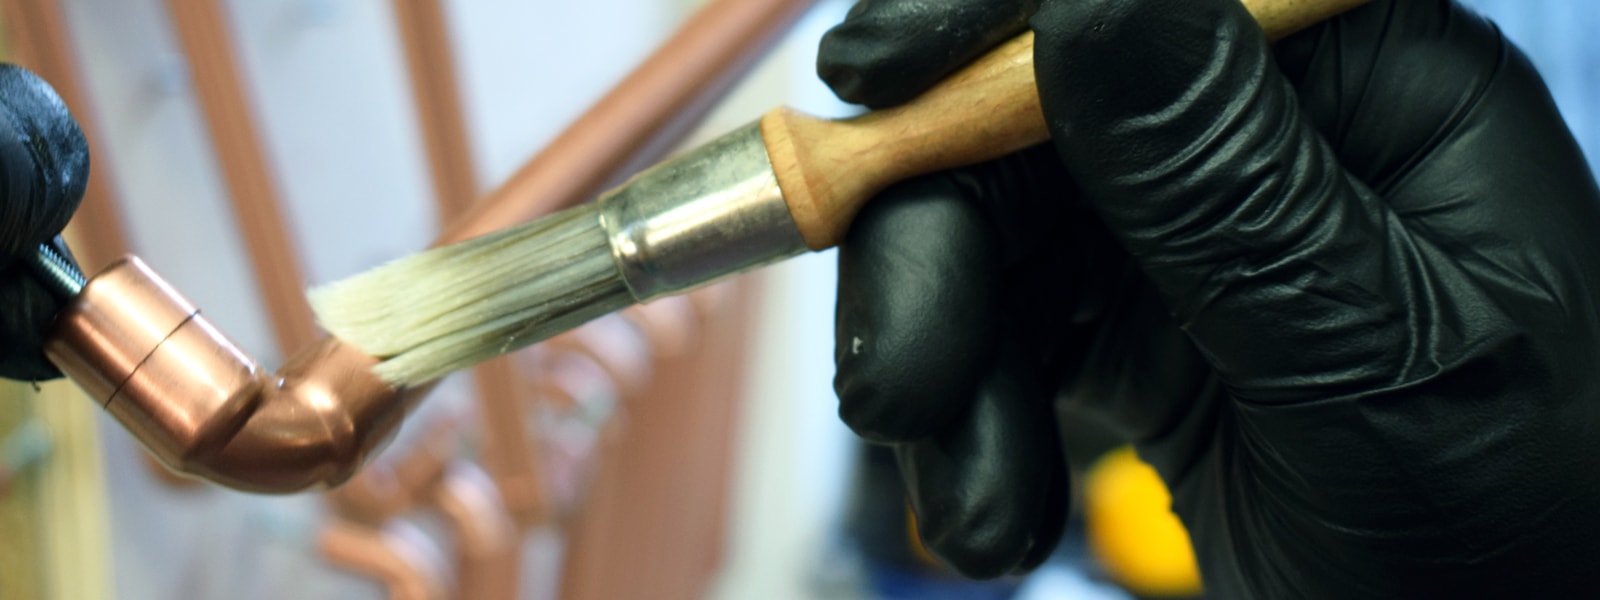 proper copper design hand lacquering a polished copper handle